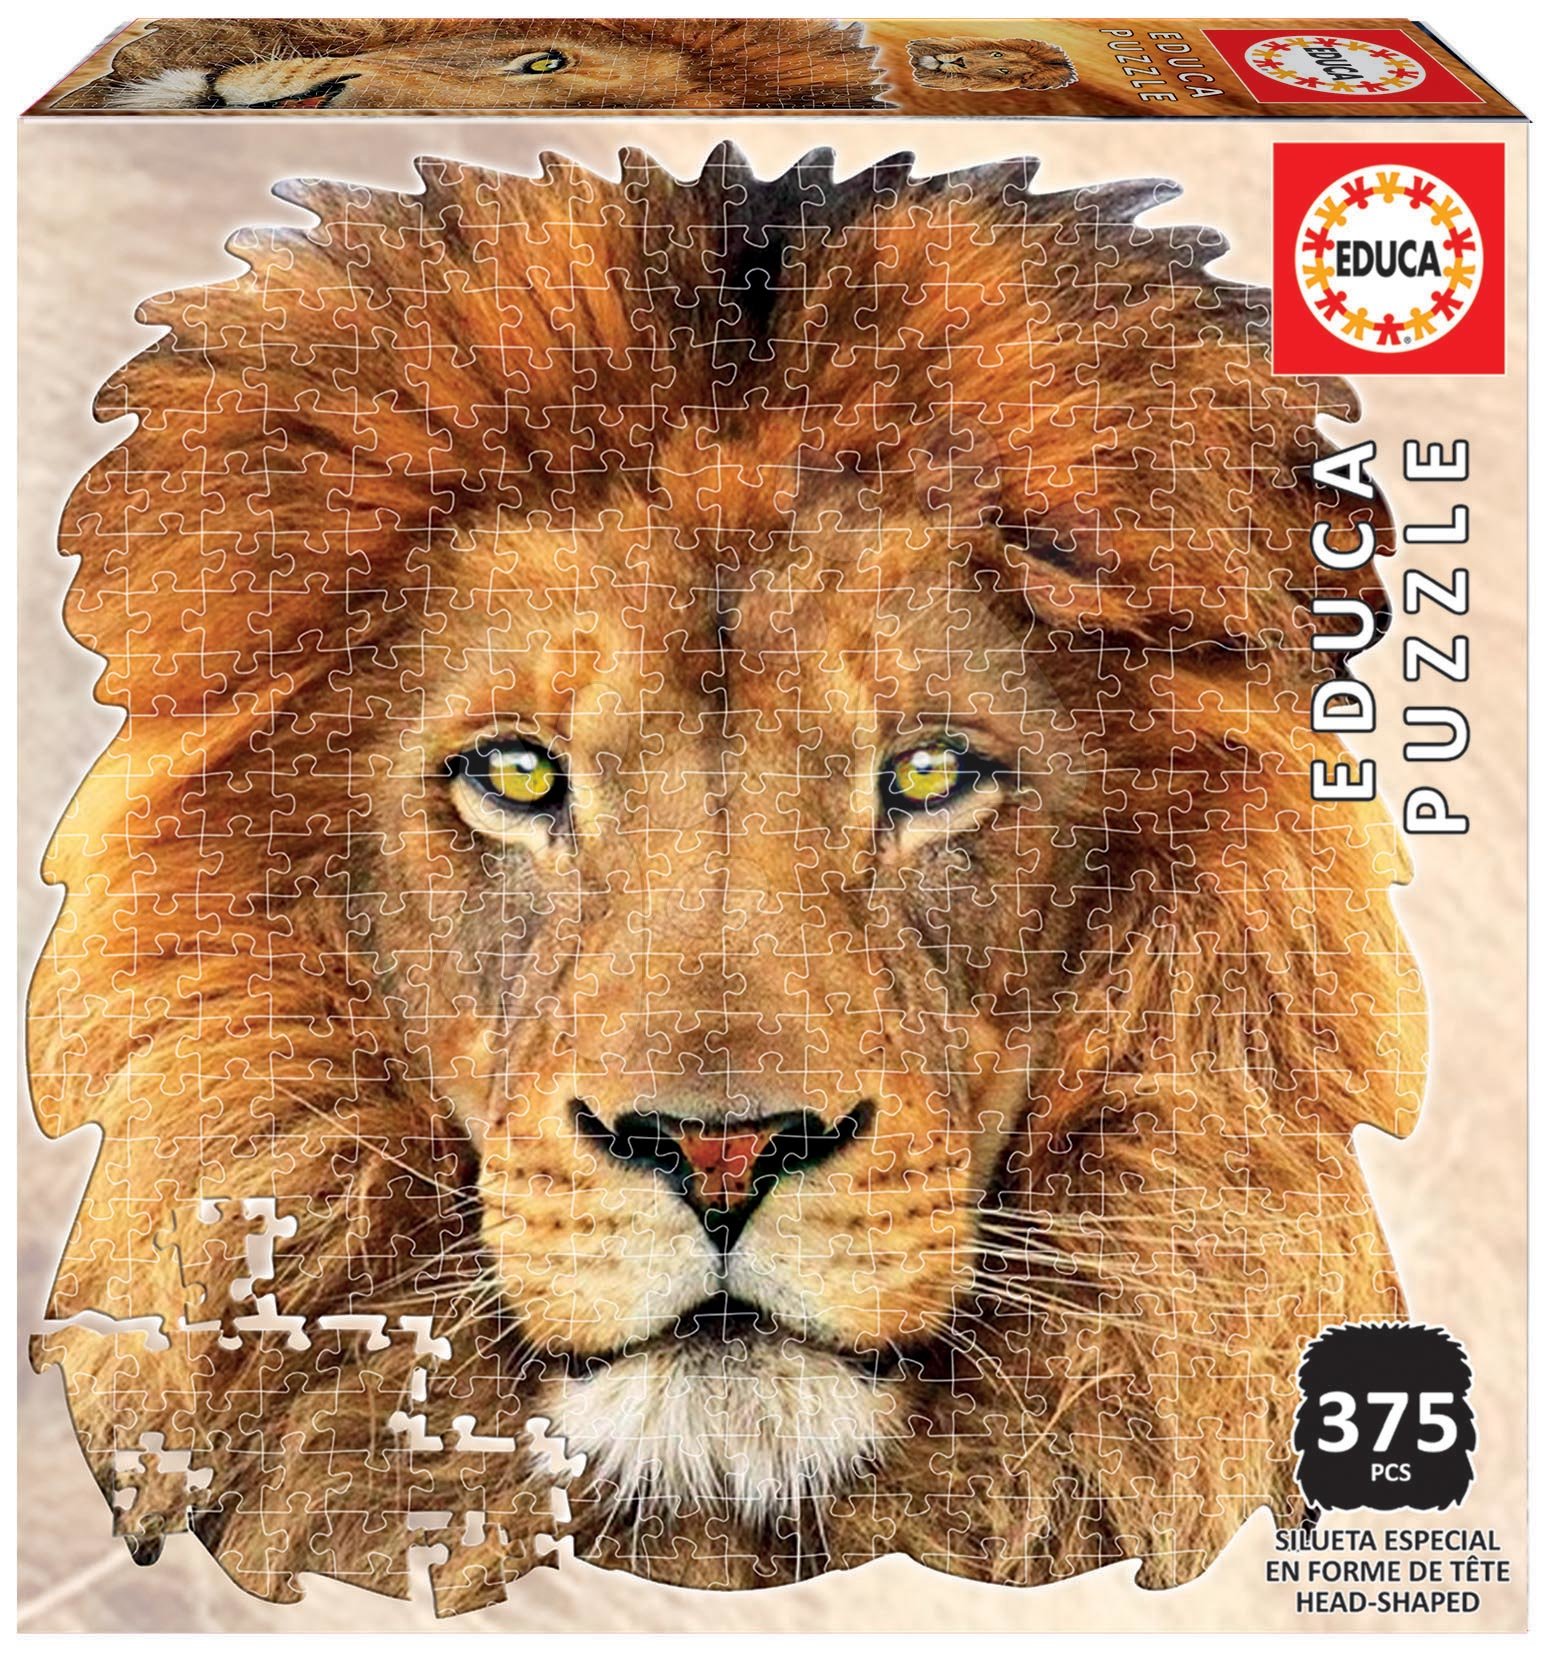 Puzzle Lion face shape Educa 375 dielov a Fix lepidlo od 11 rokov